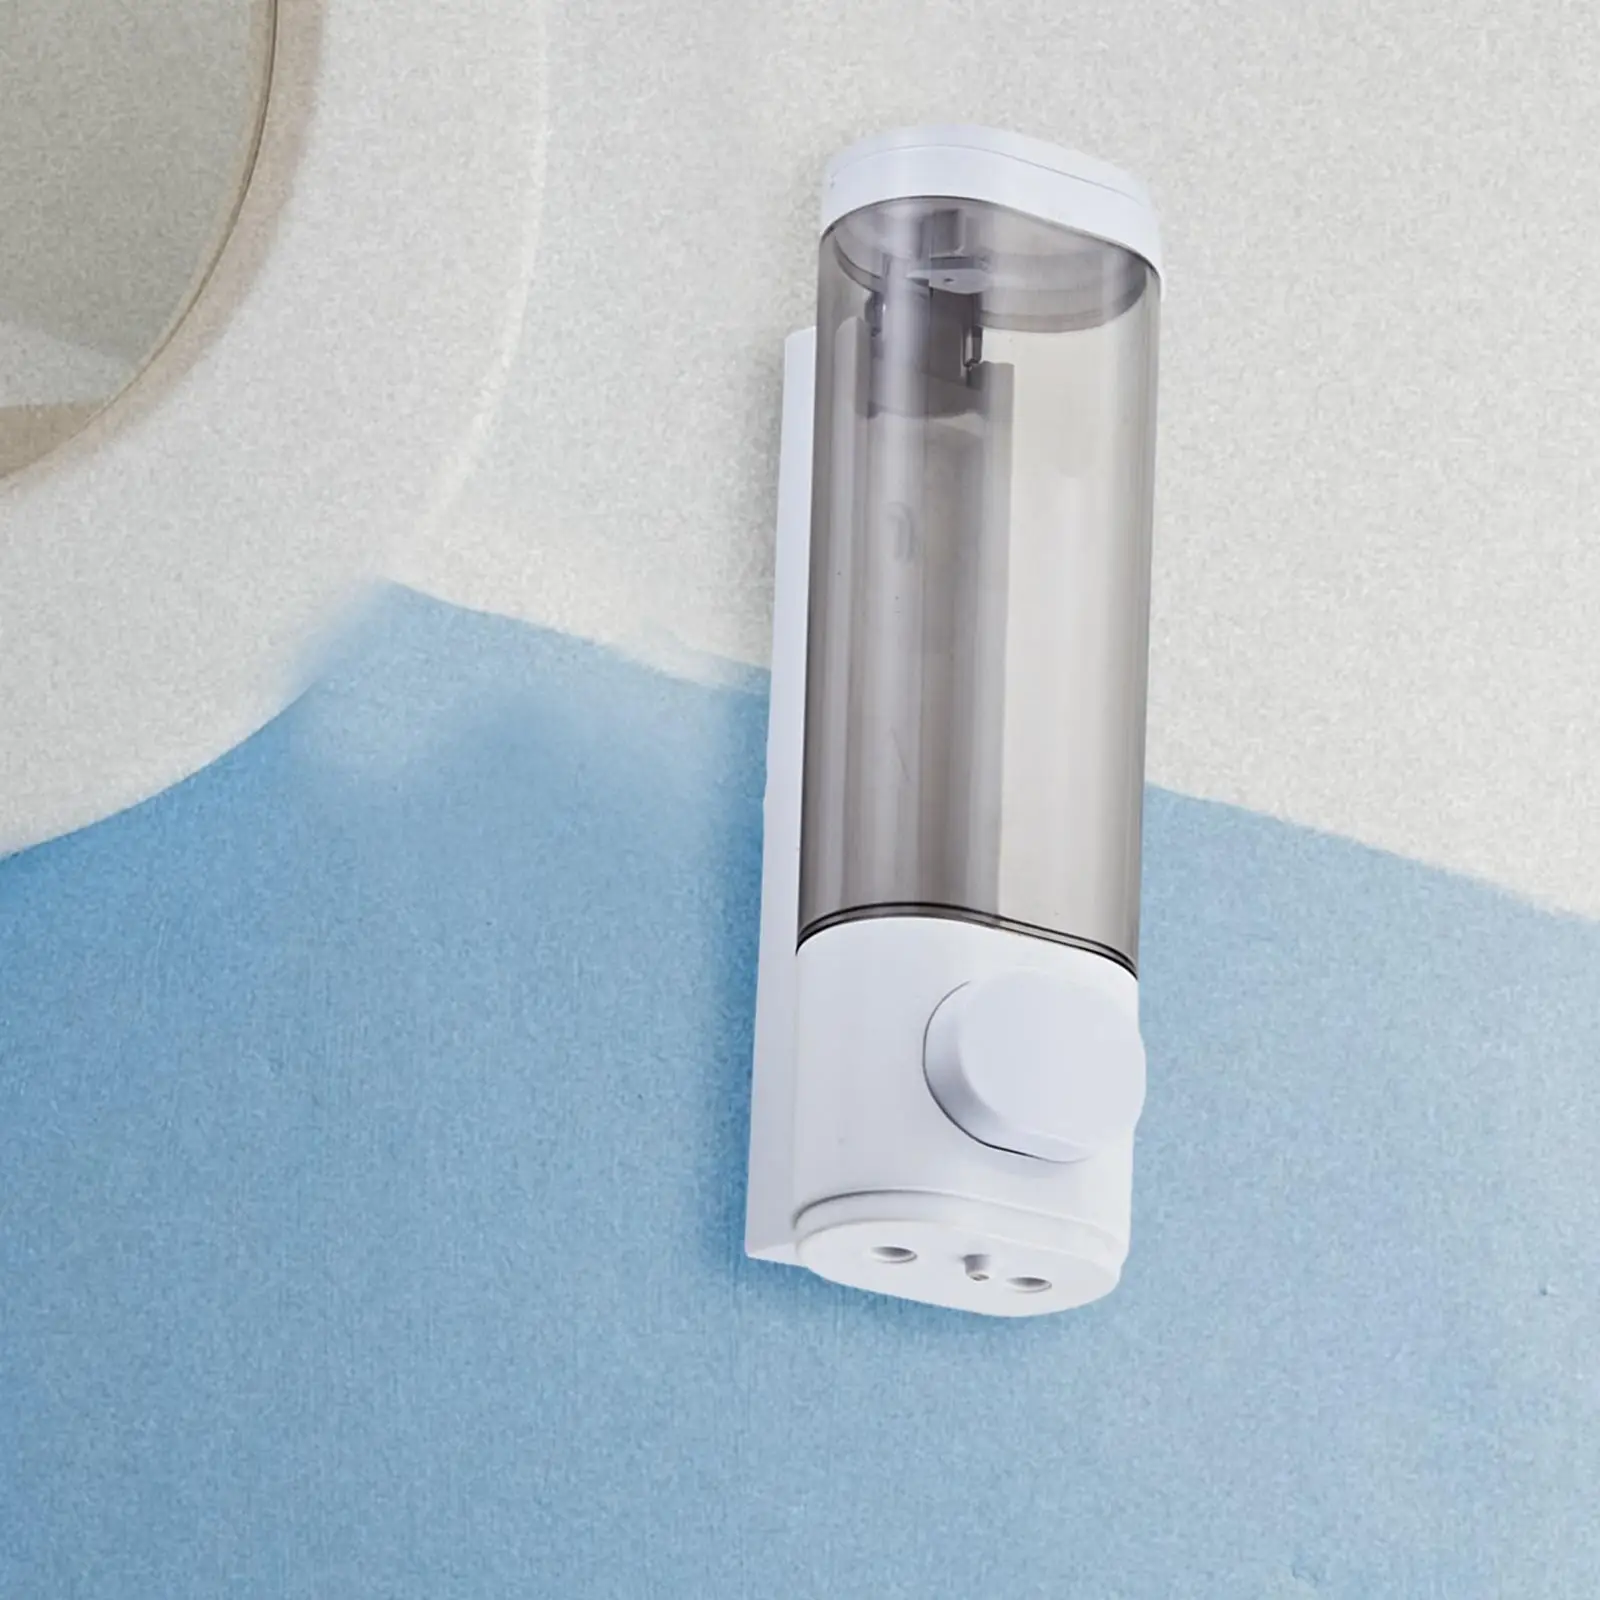 Manual Soap Dispenser Wall Mounted Convenient Durable Liquid Soap Dispenser Hand Control for Bathroom Home Toilet Office Hotel